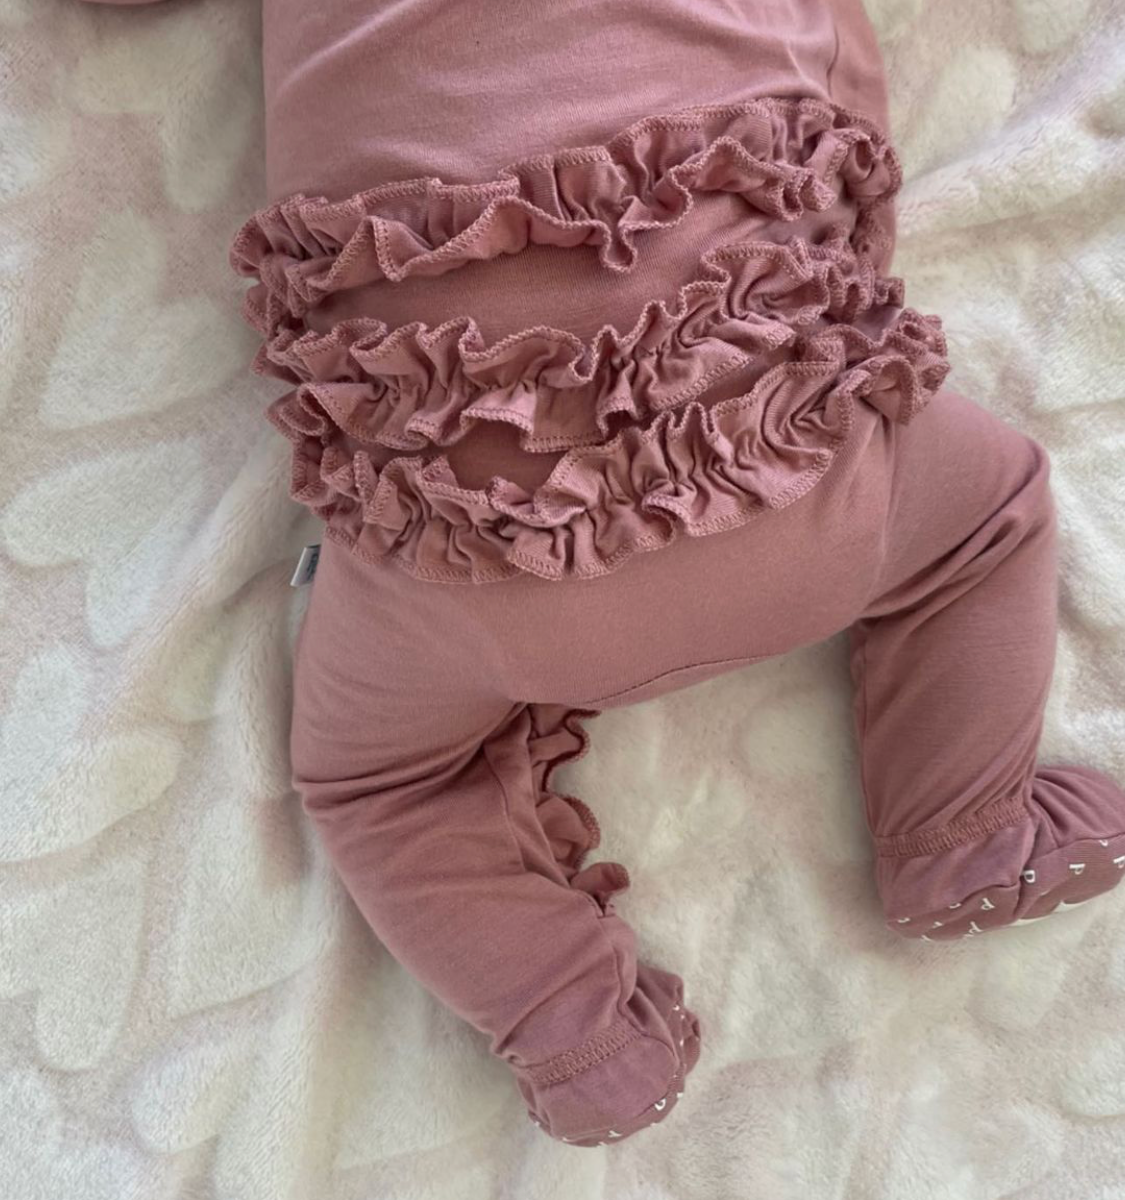 Patrick Mahomes, Brittany Matthews welcome baby girl